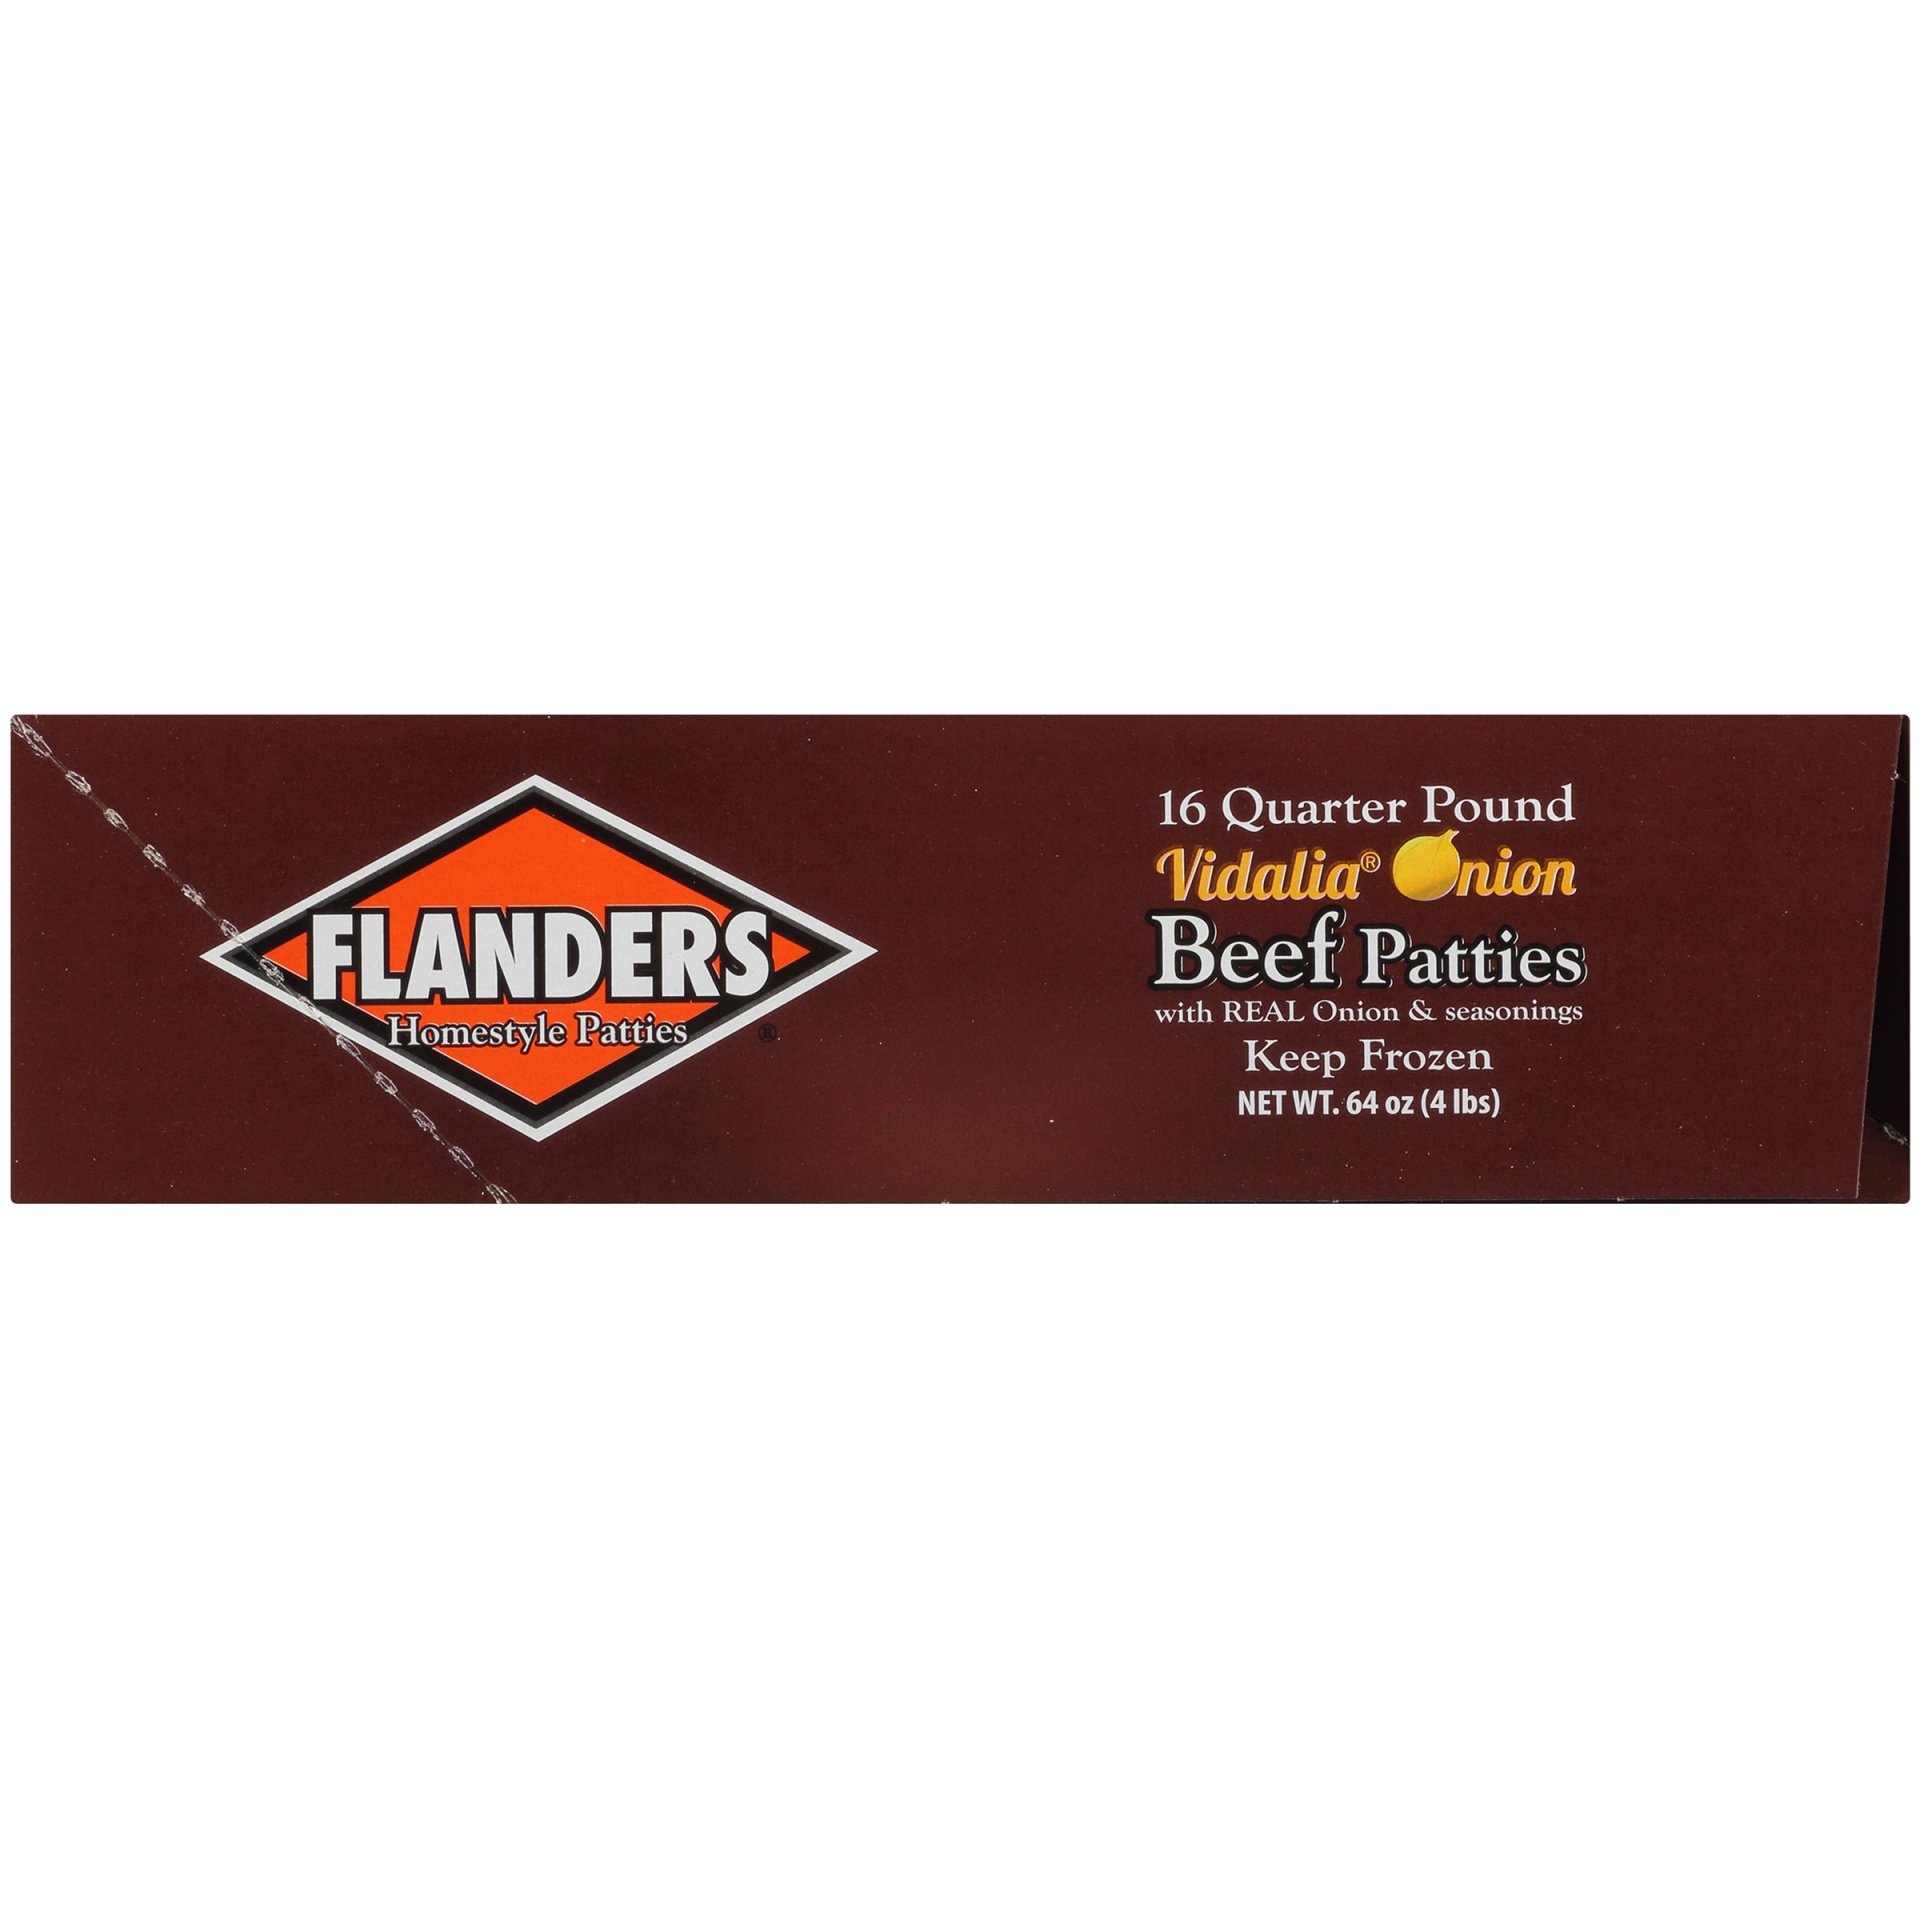 slide 5 of 8, Flanders Homestyle Patties 16 Quarter Pound Vidalia Onion Beef Patties, 4 lb